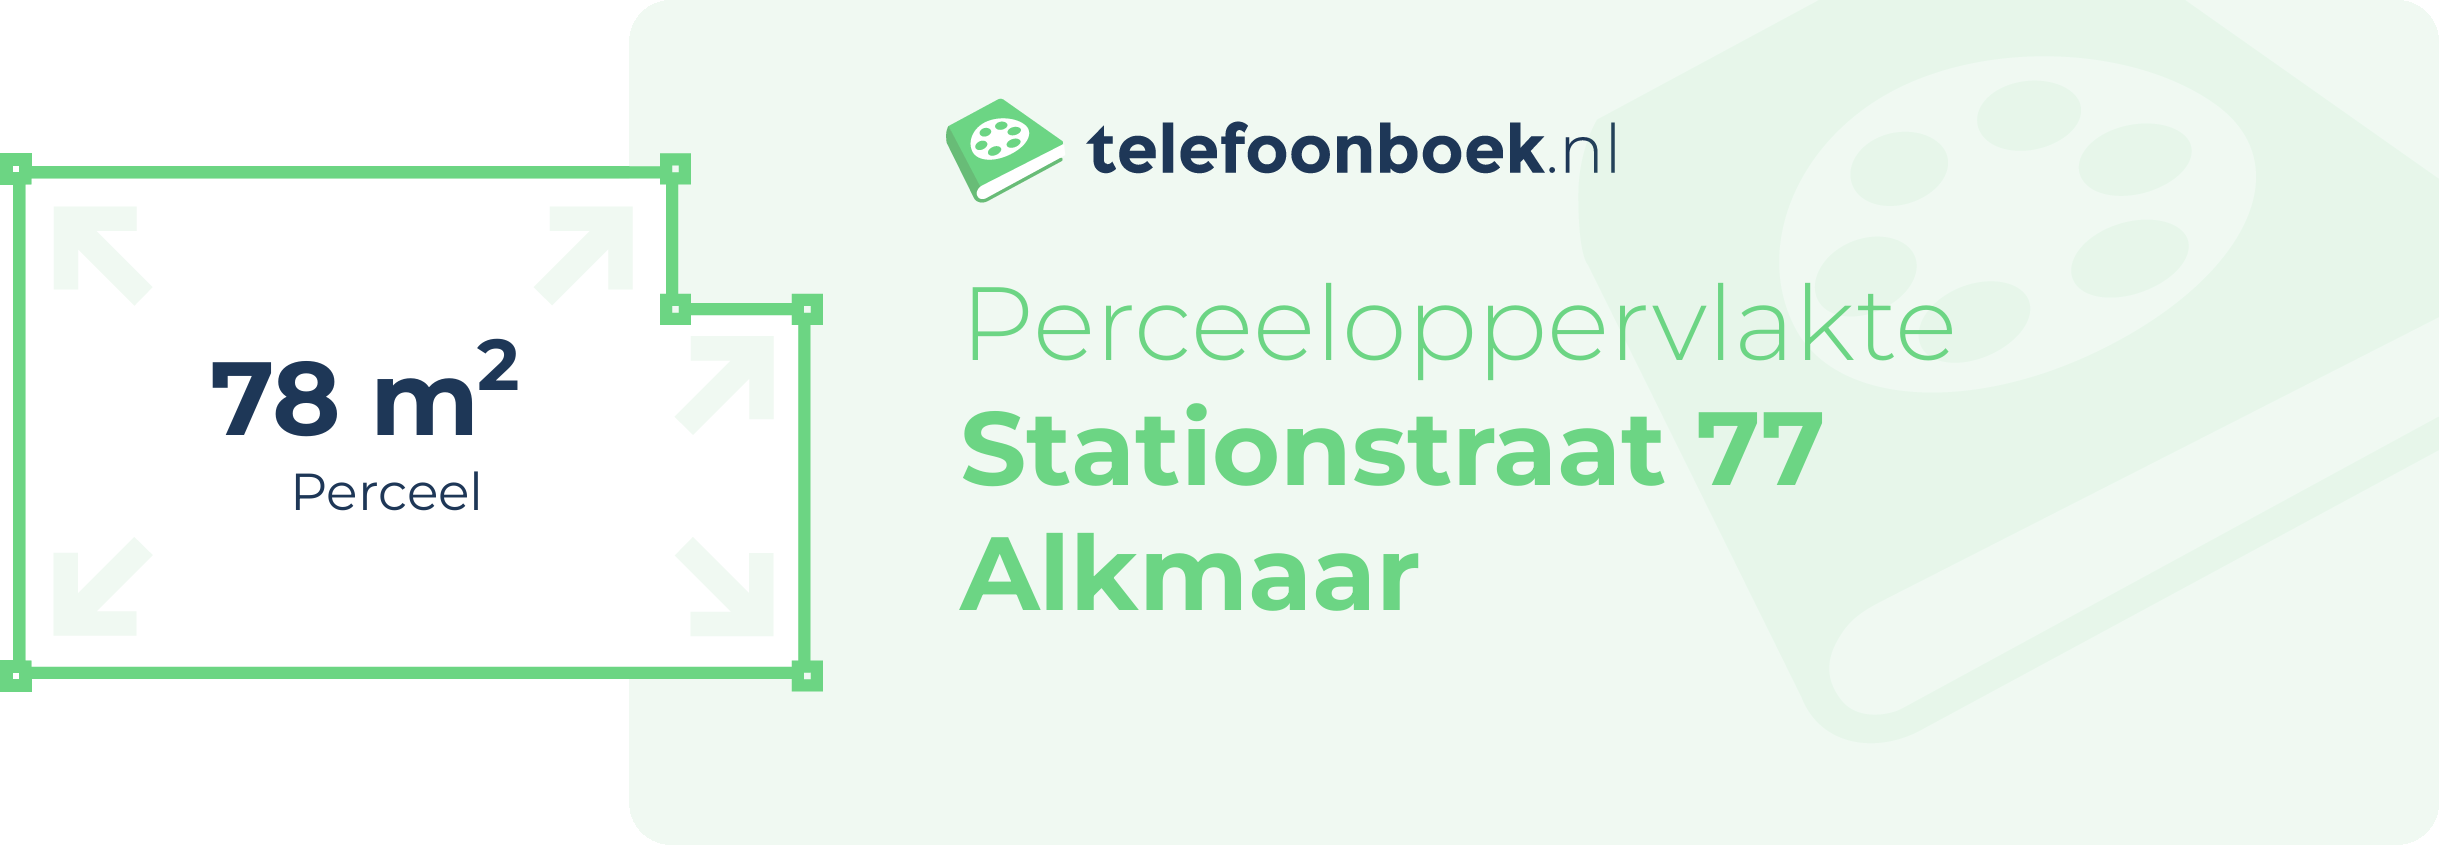 Perceeloppervlakte Stationstraat 77 Alkmaar